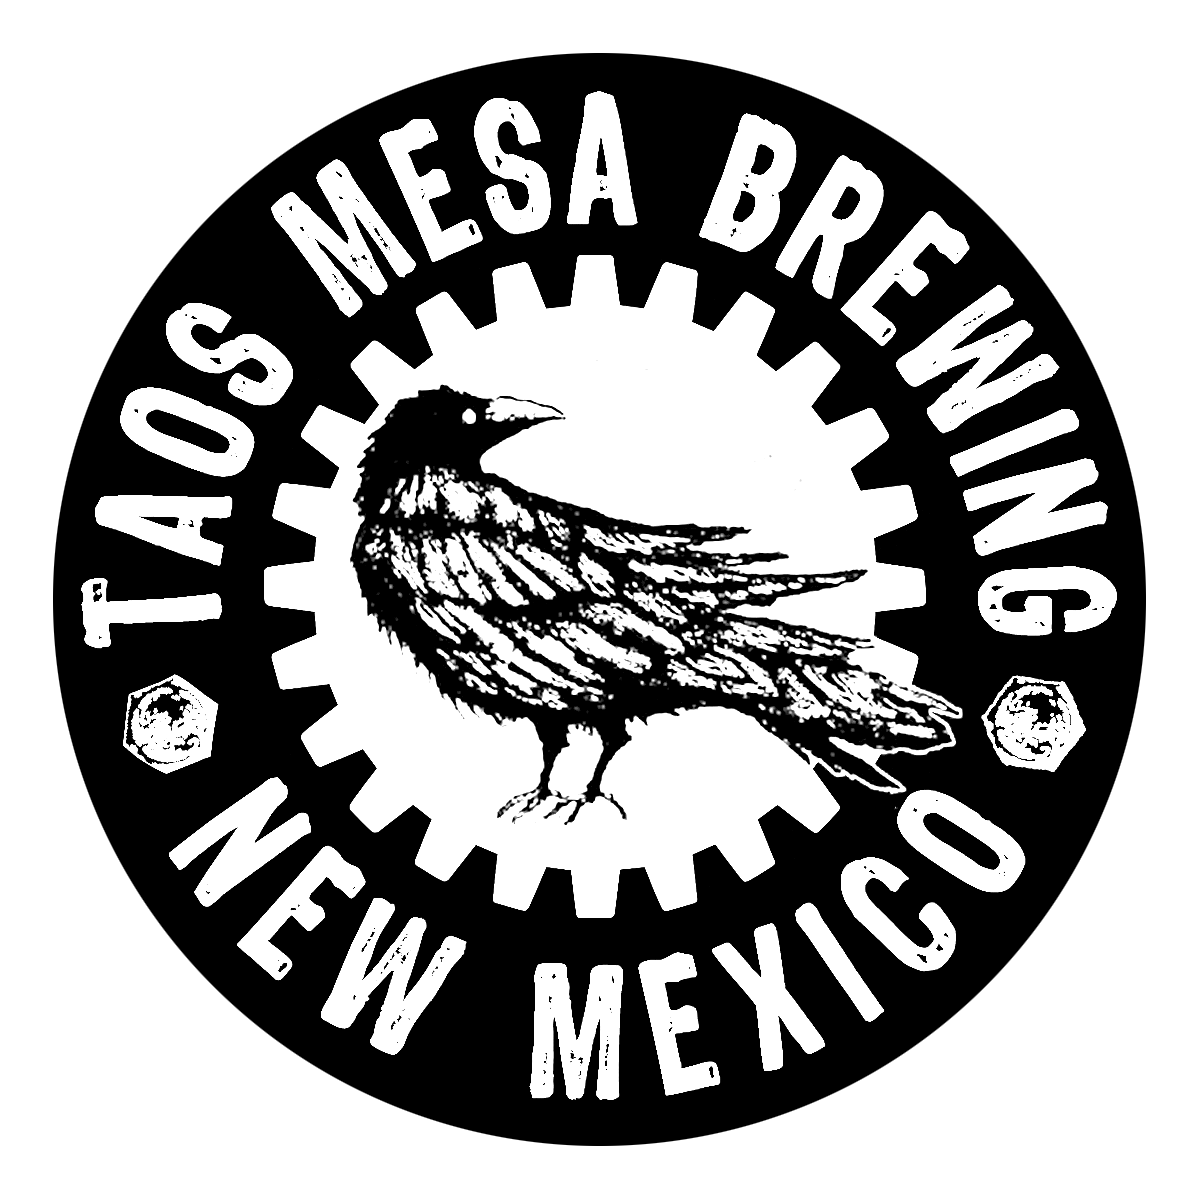 Taos Mesa Brewing